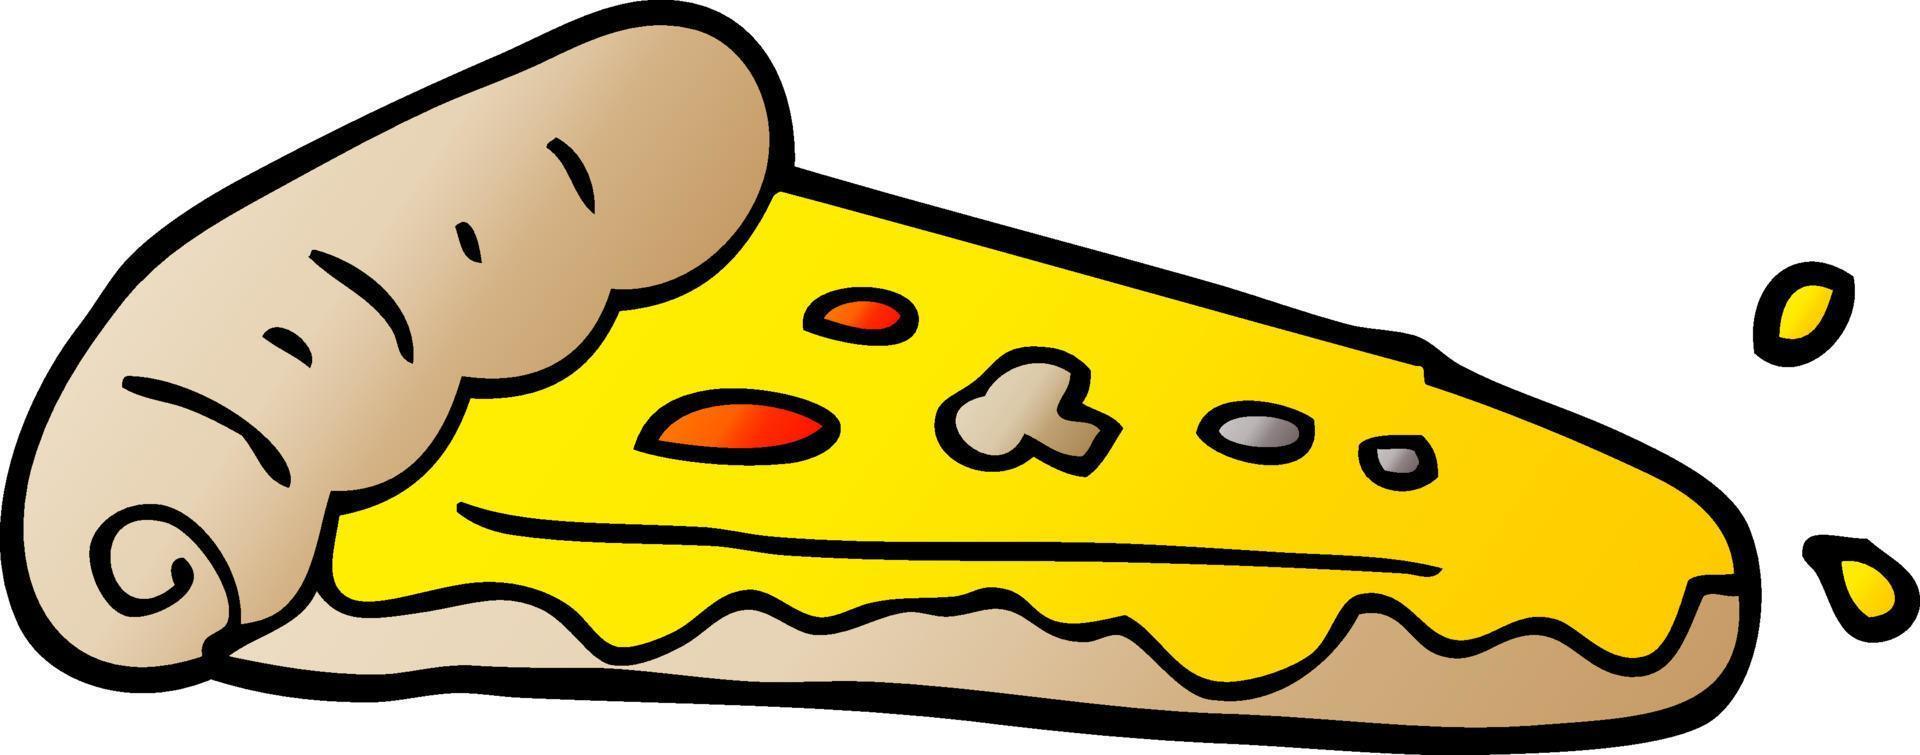 cartoon doodle pizza slice vector